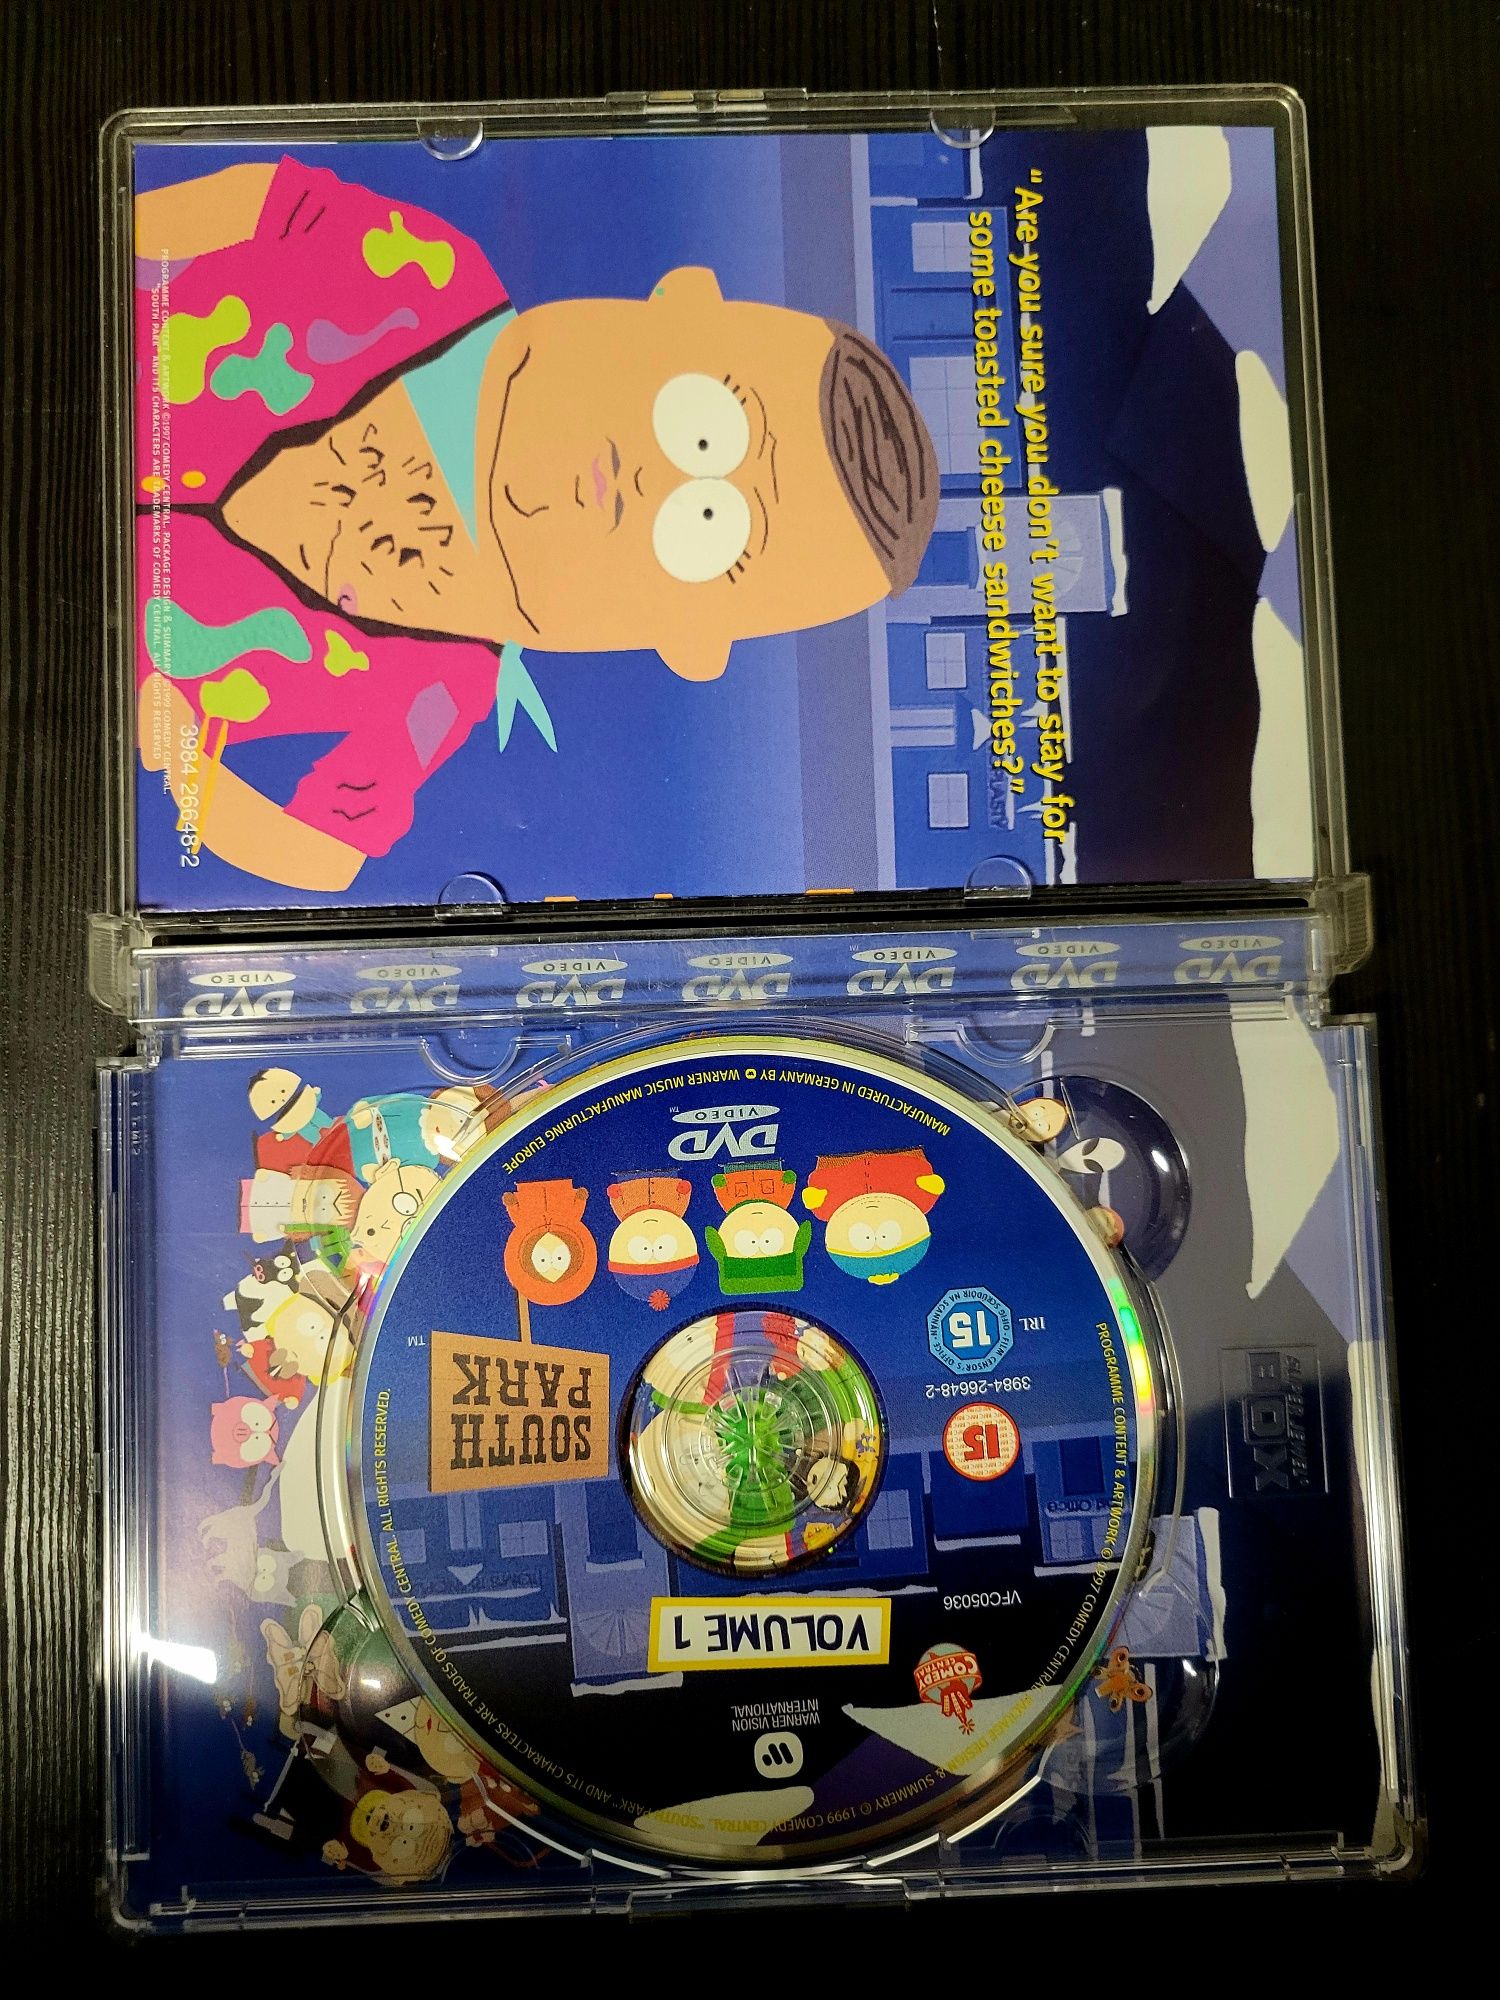 South Park DVD Volume 1 Bdb-